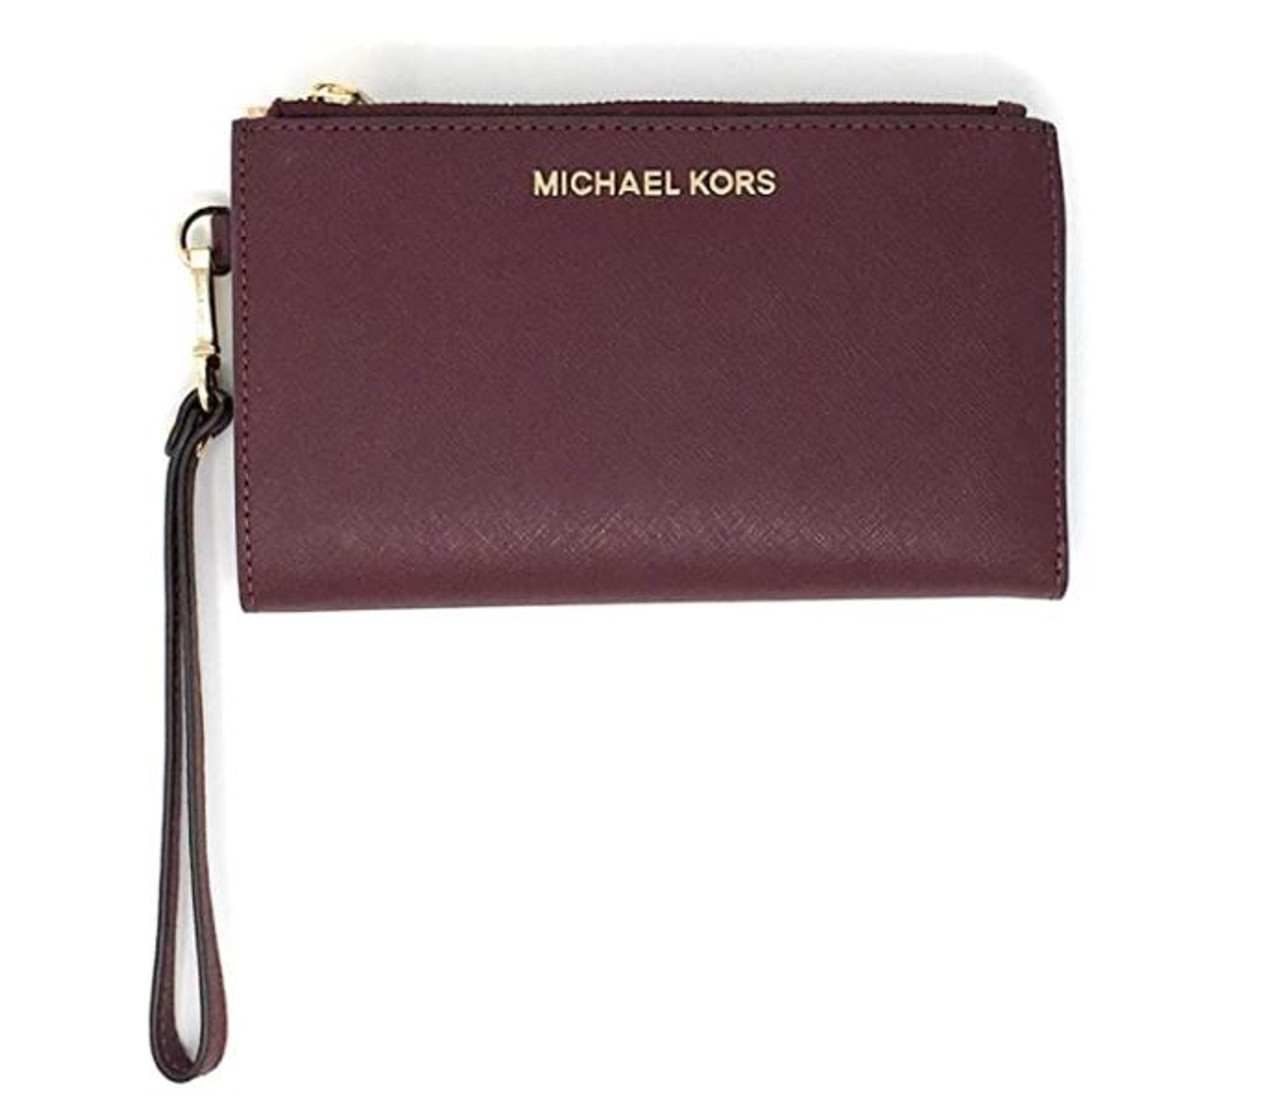 Michael Kors Jet Set Travel Phone Wallet Crossbody Saffiano Leather Merlot